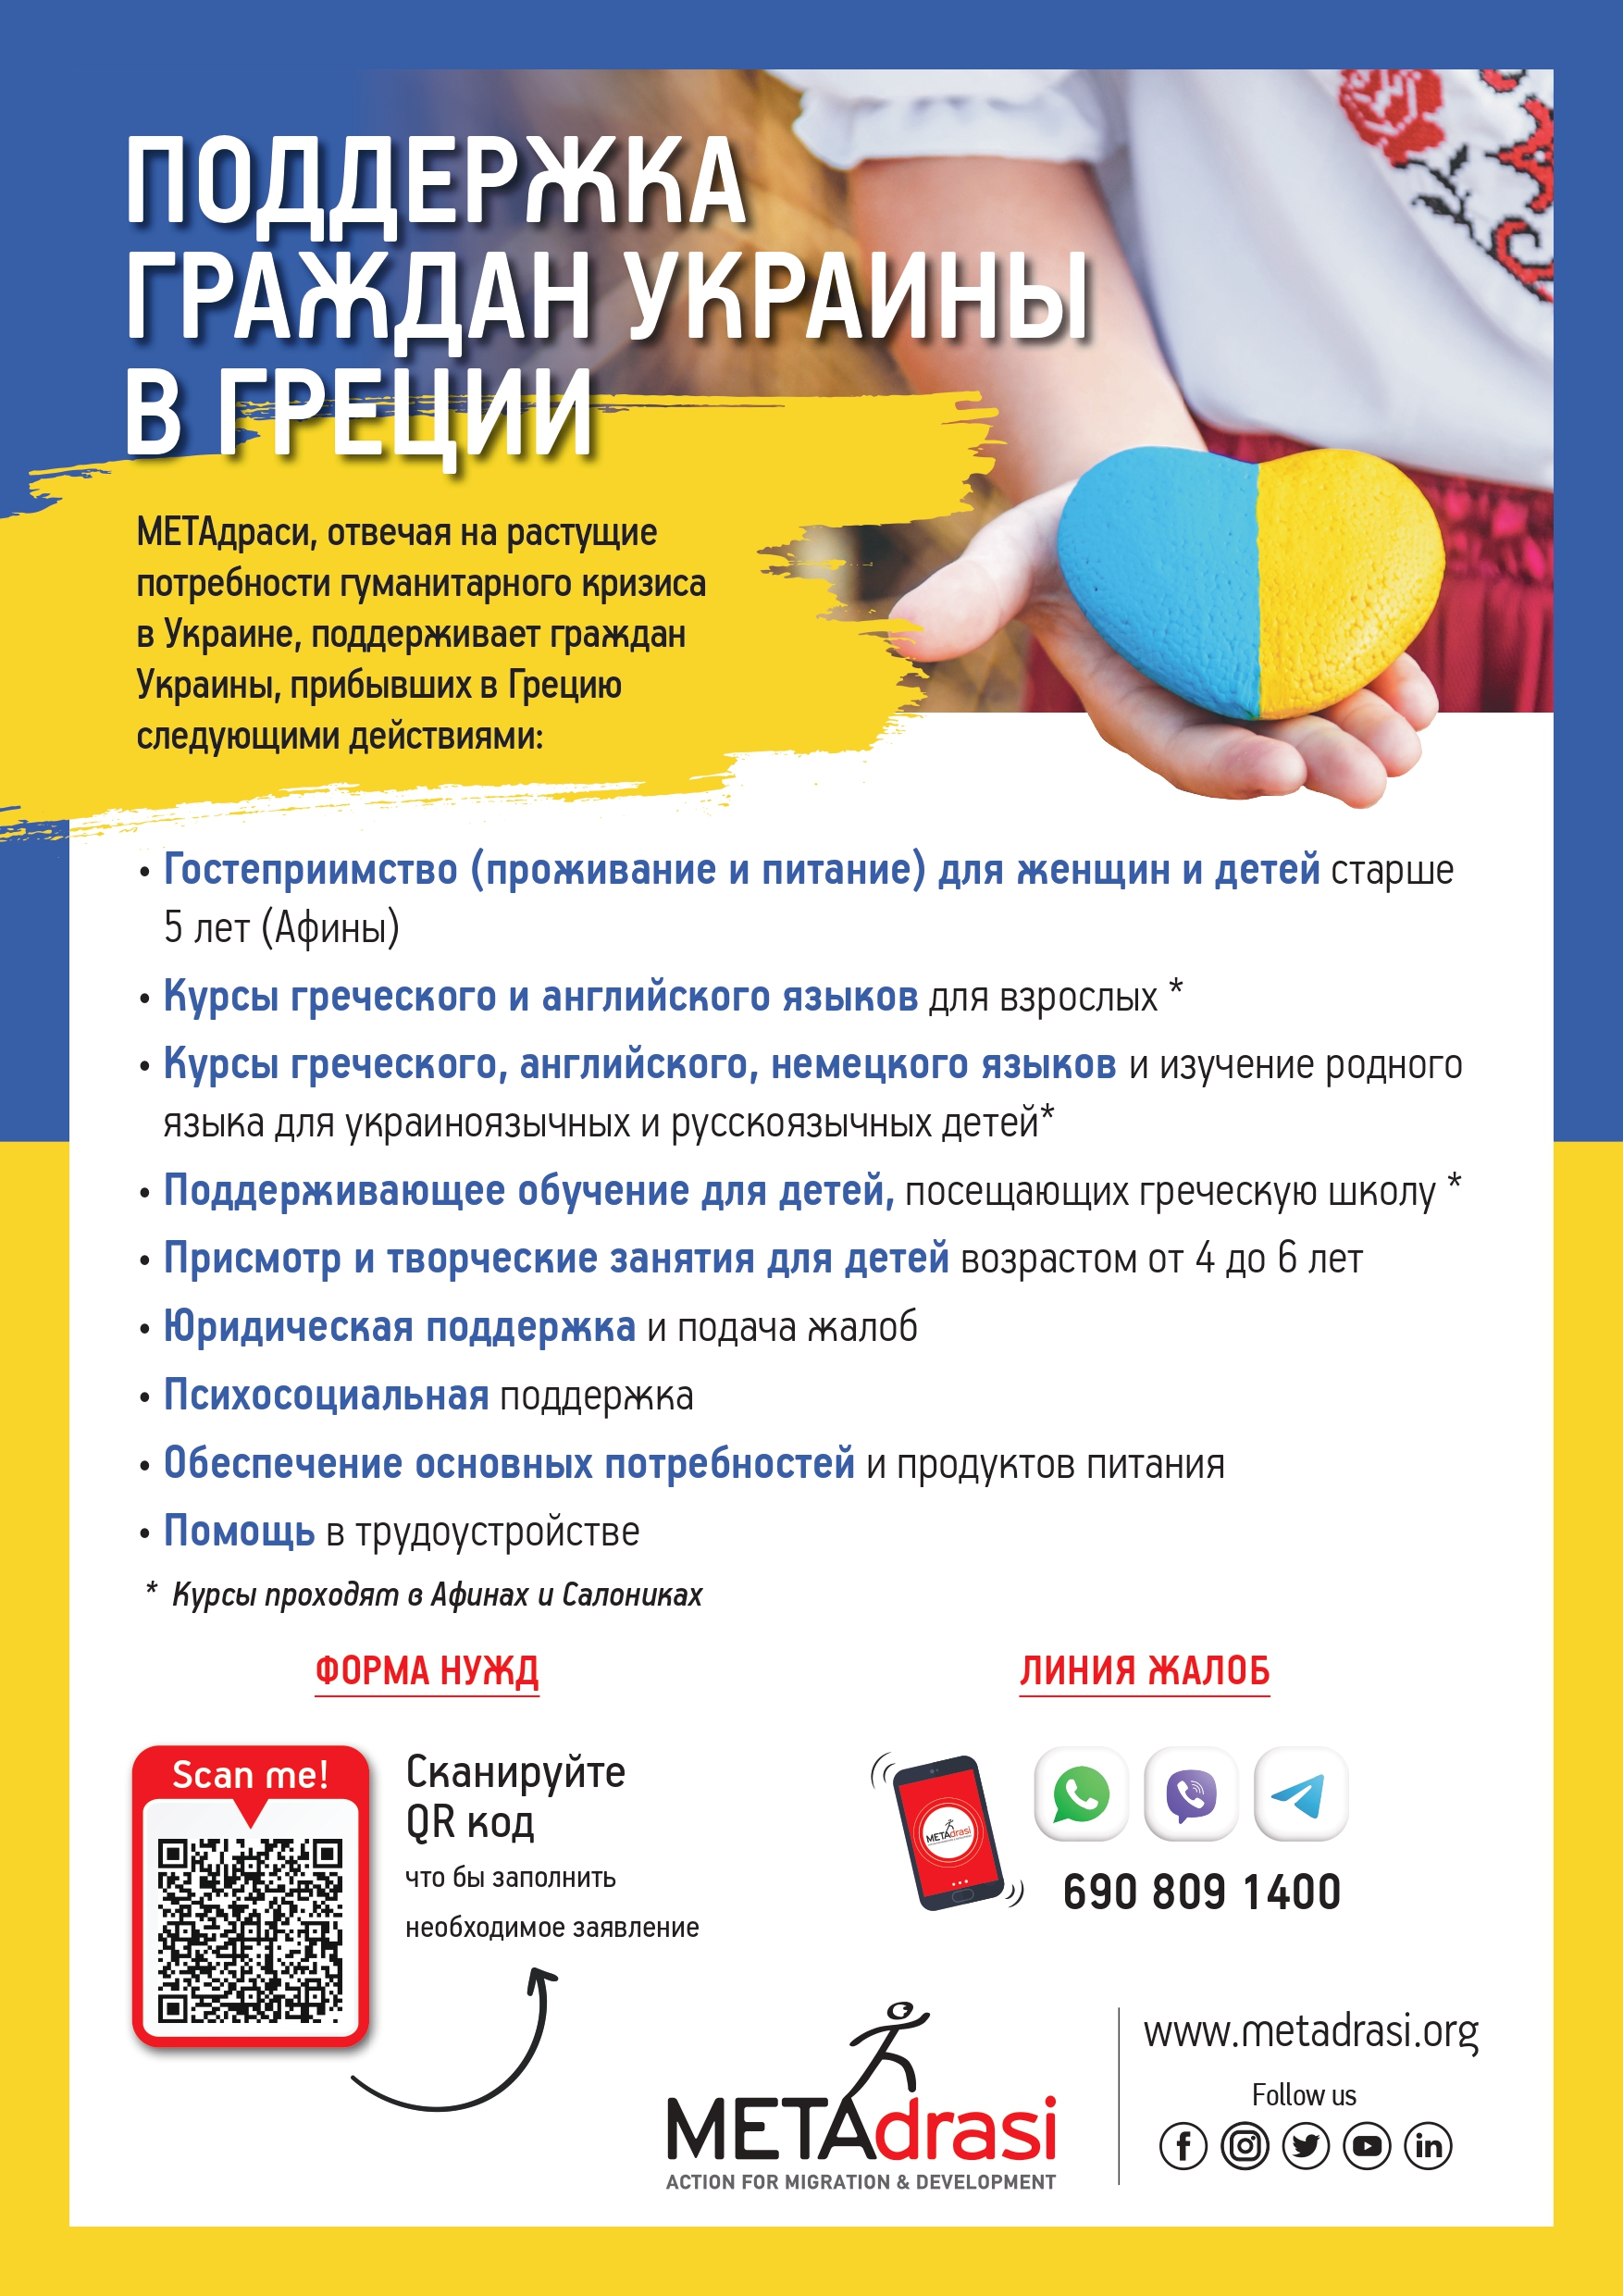 Metadrasi - UKRAINE ENHMEROTIKO A3 RU 1 page 0001